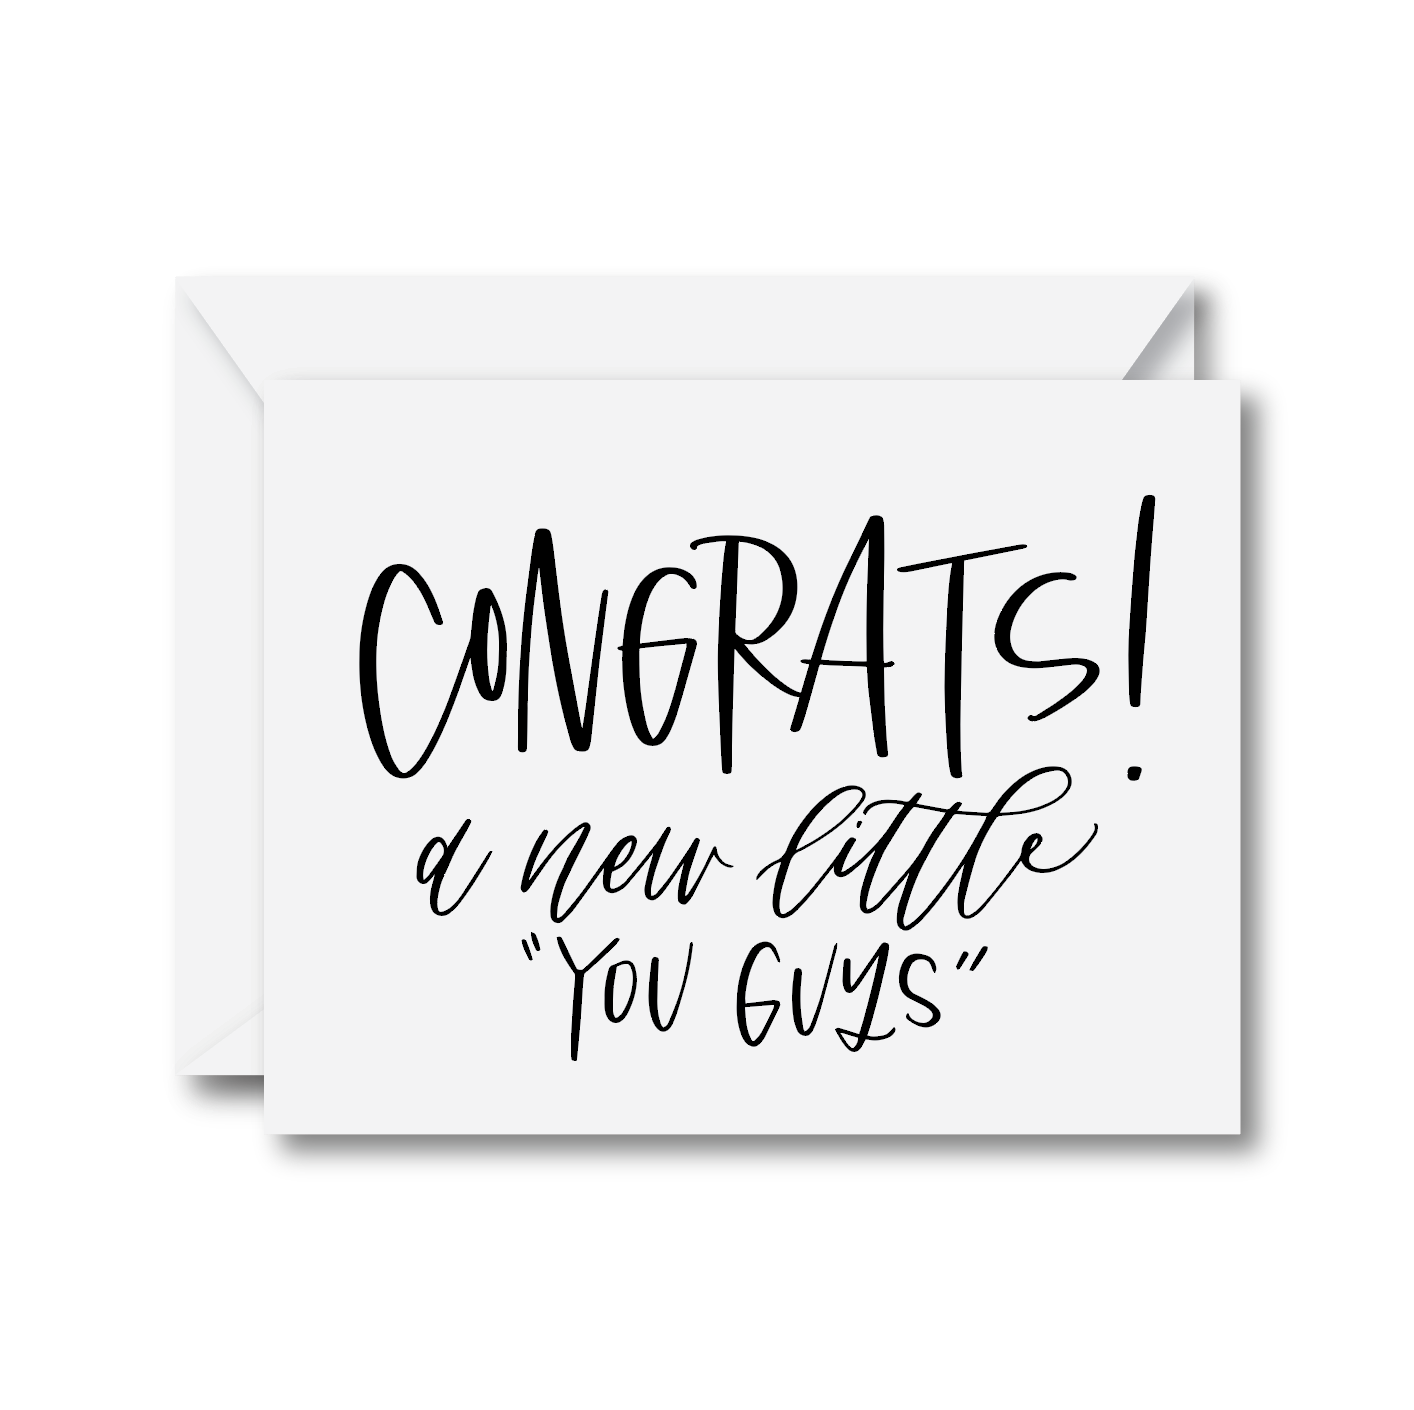 Congrats! A New Little “You Guys” Card